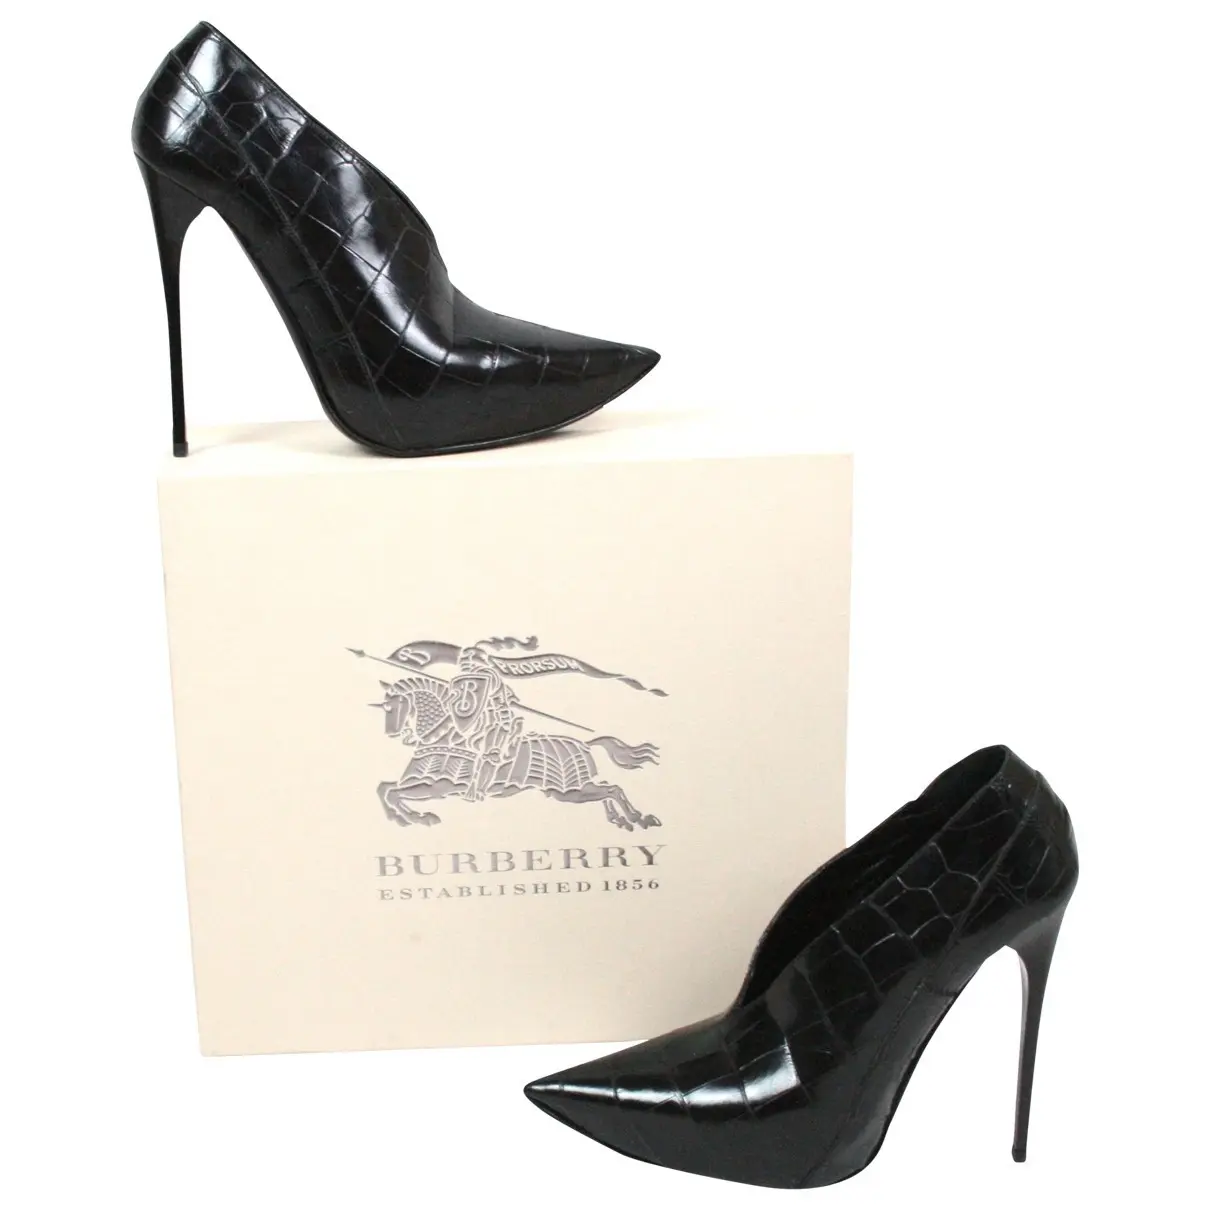 Buy Burberry Black Leather Heels online